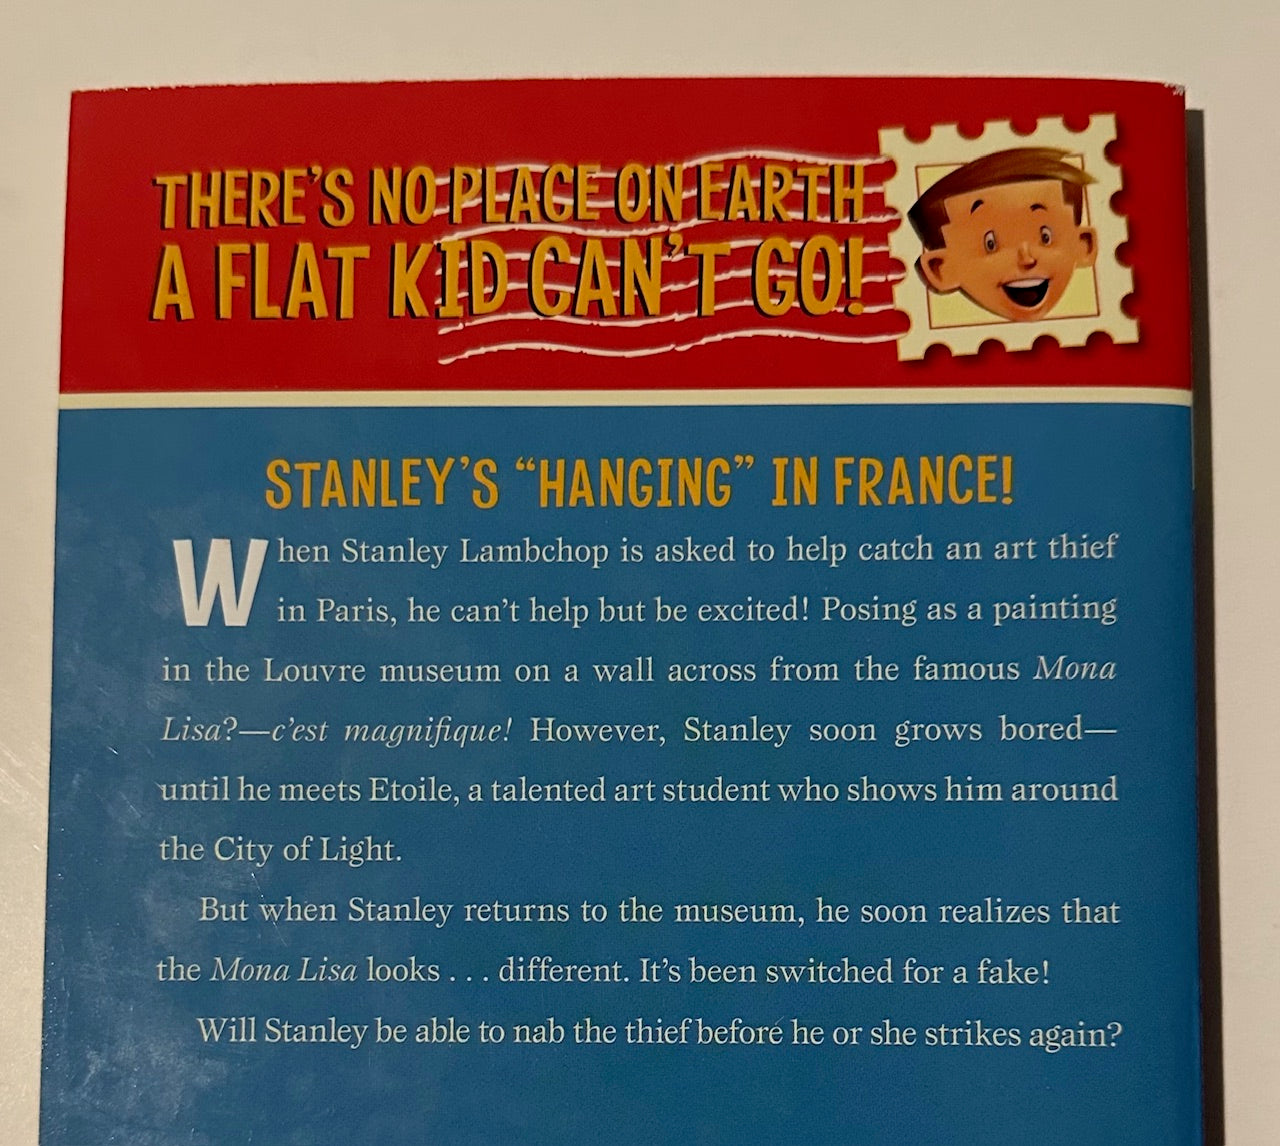 "Flat Stanley's Worldwide Adventures 11: Framed in France"